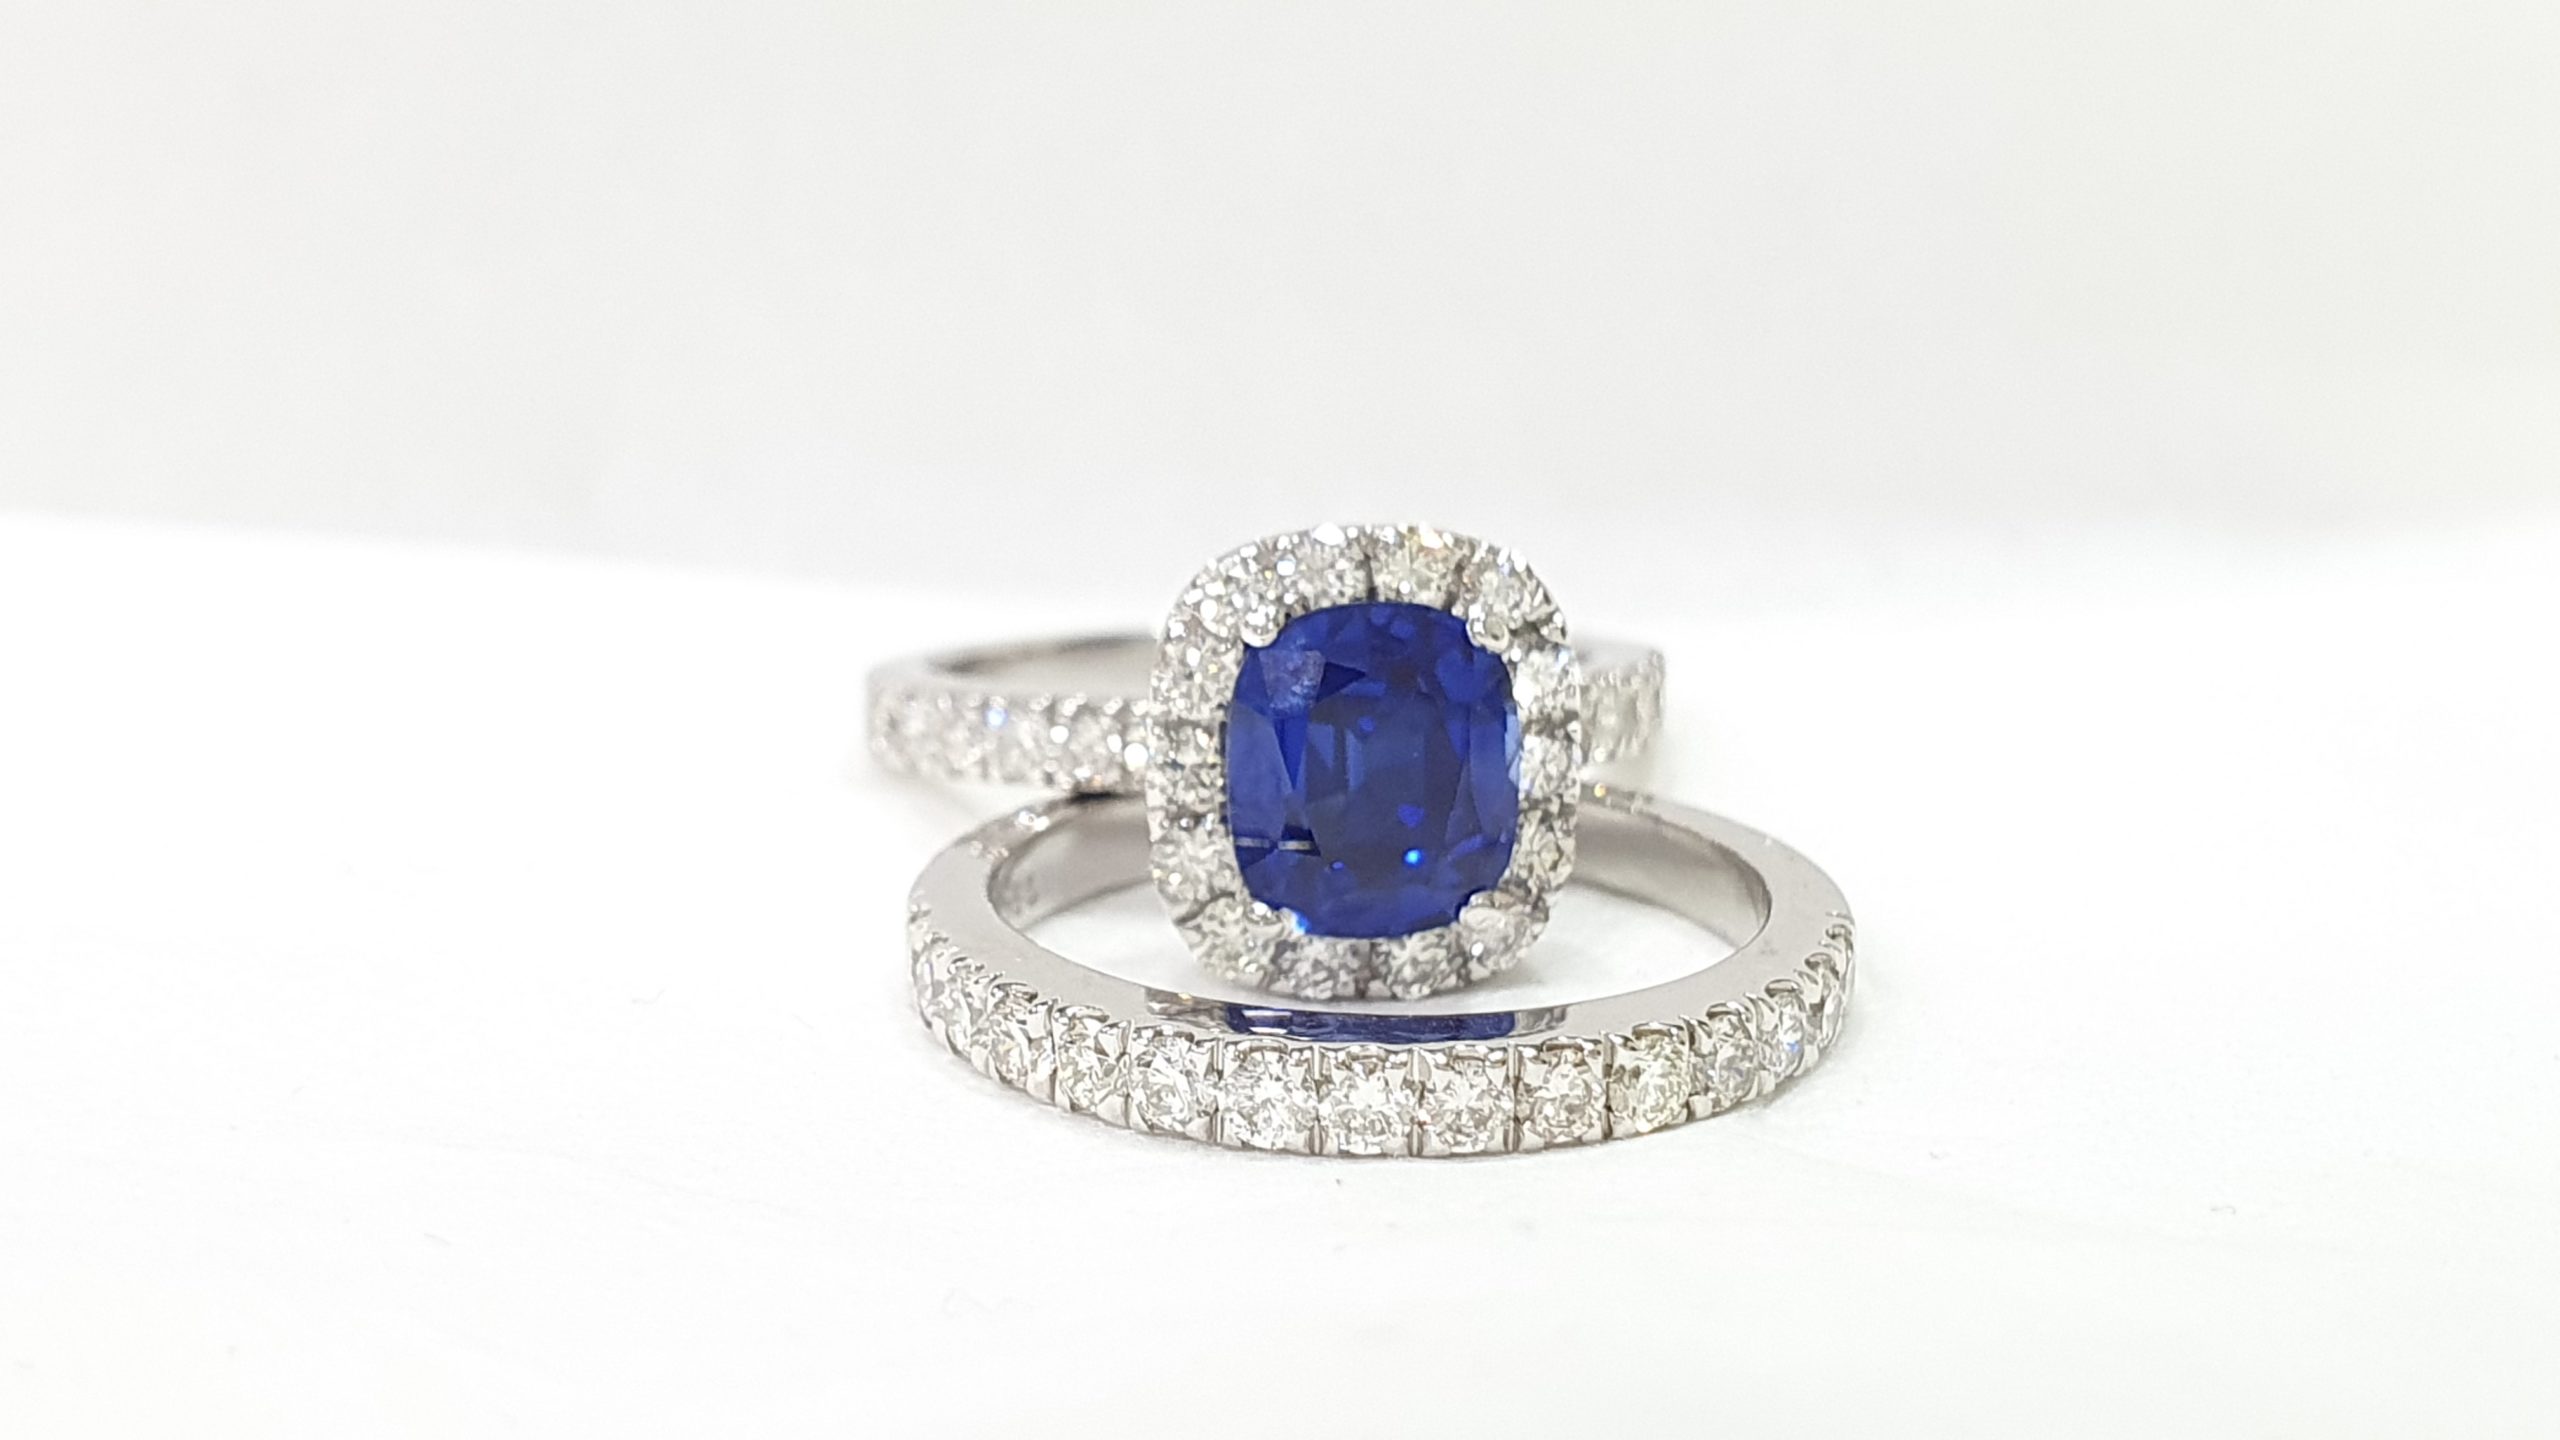 Buy Single Blue Stone Original Impon Finger Ring Design